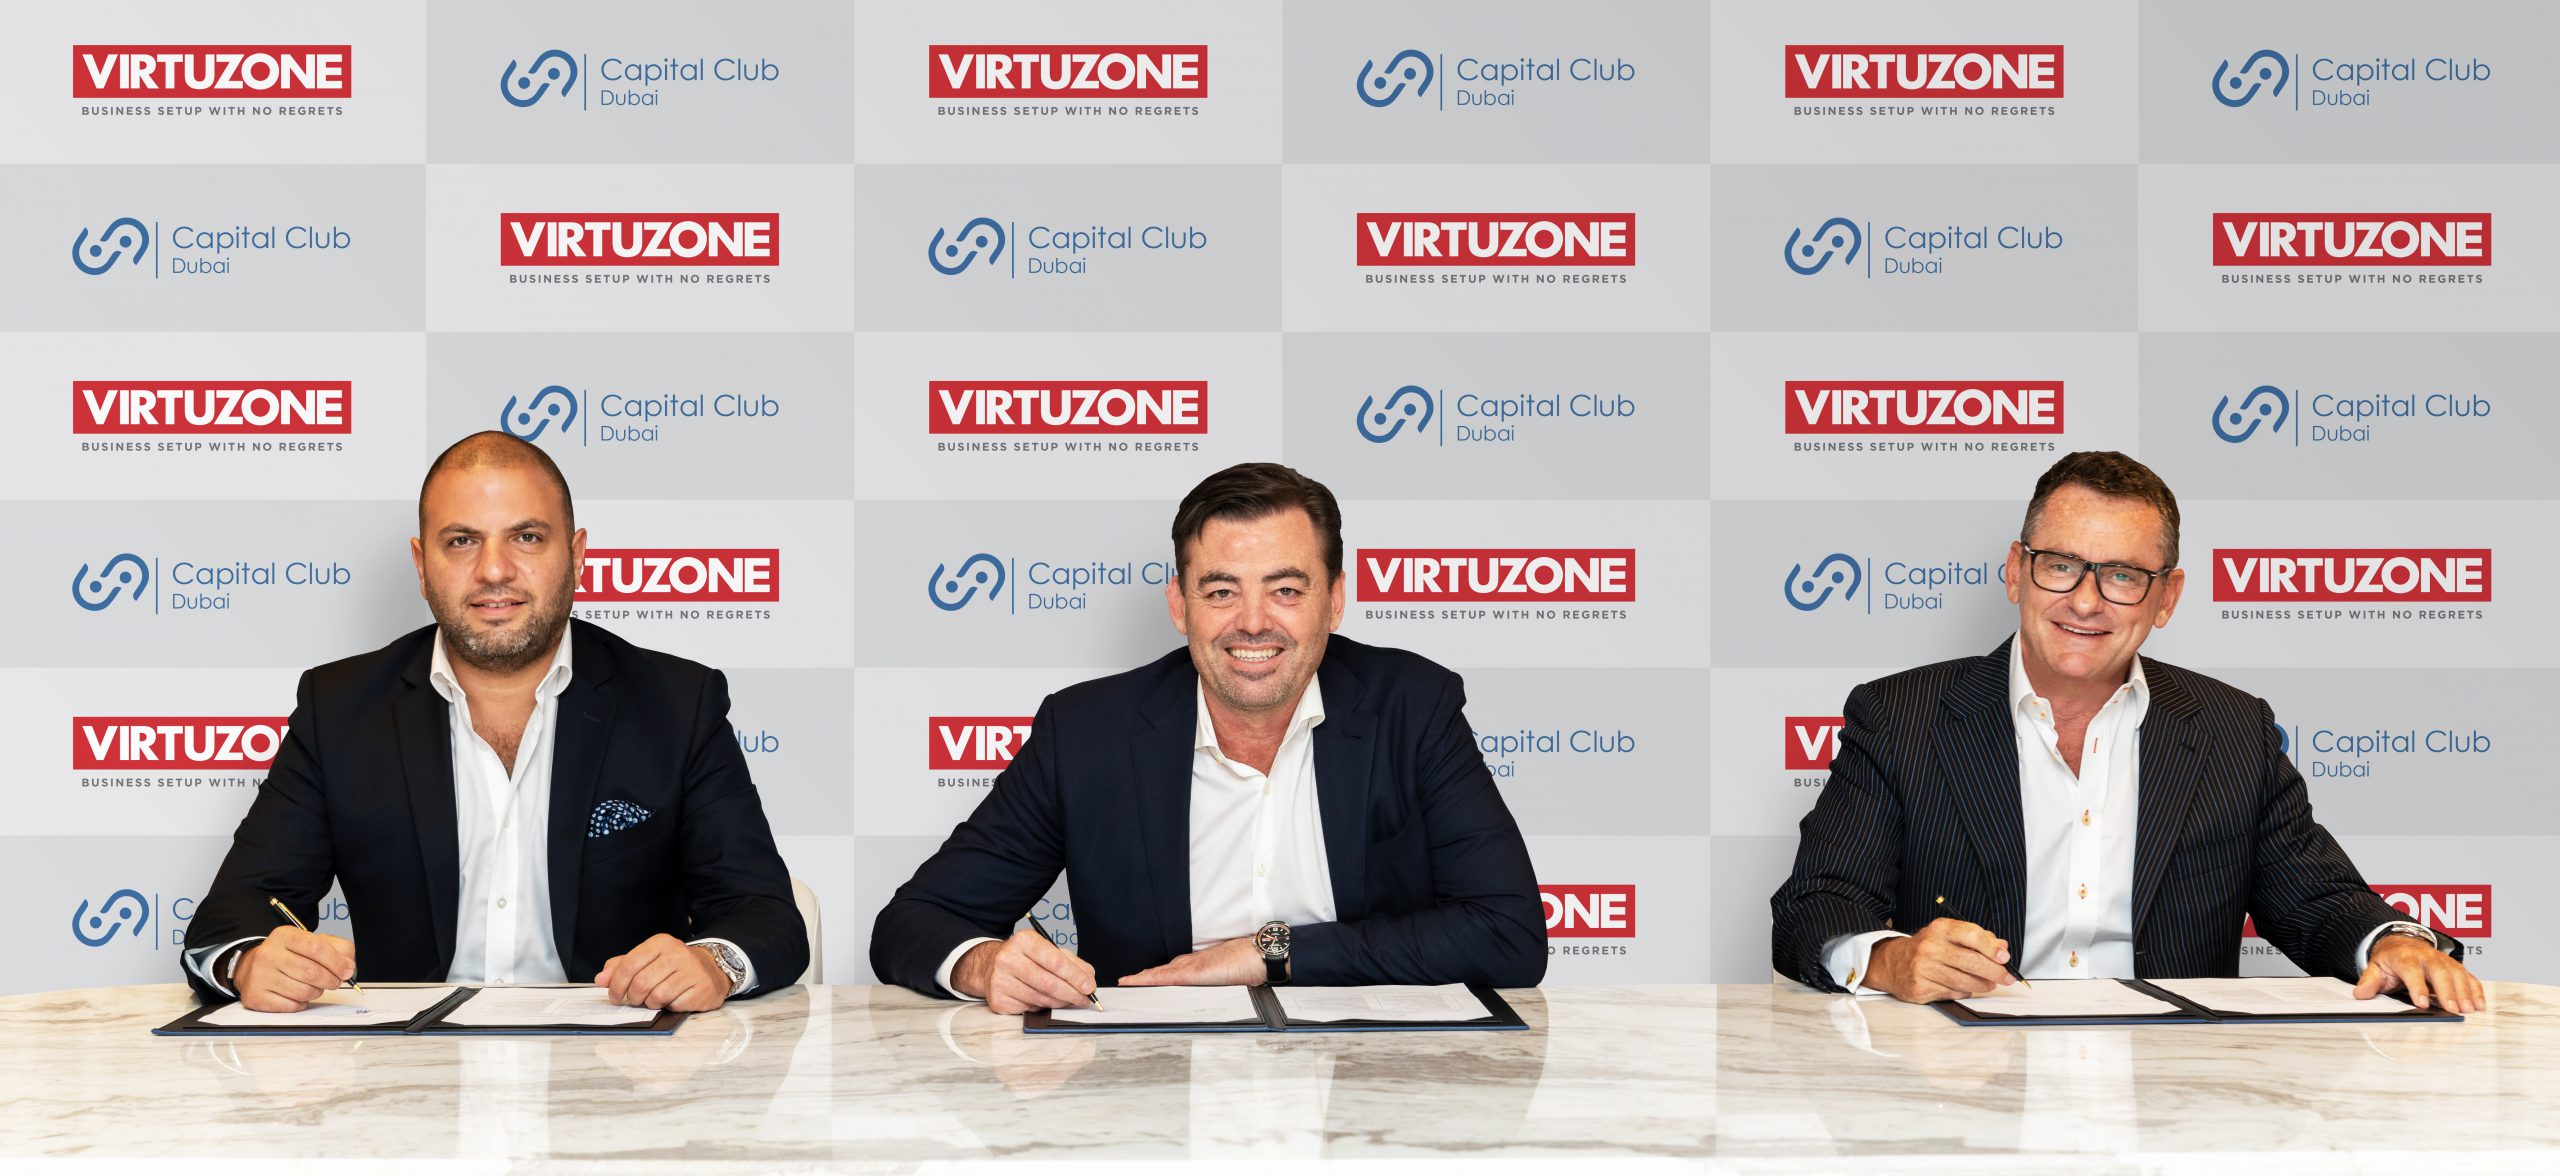 Virtuzone and Capital Club Partnership